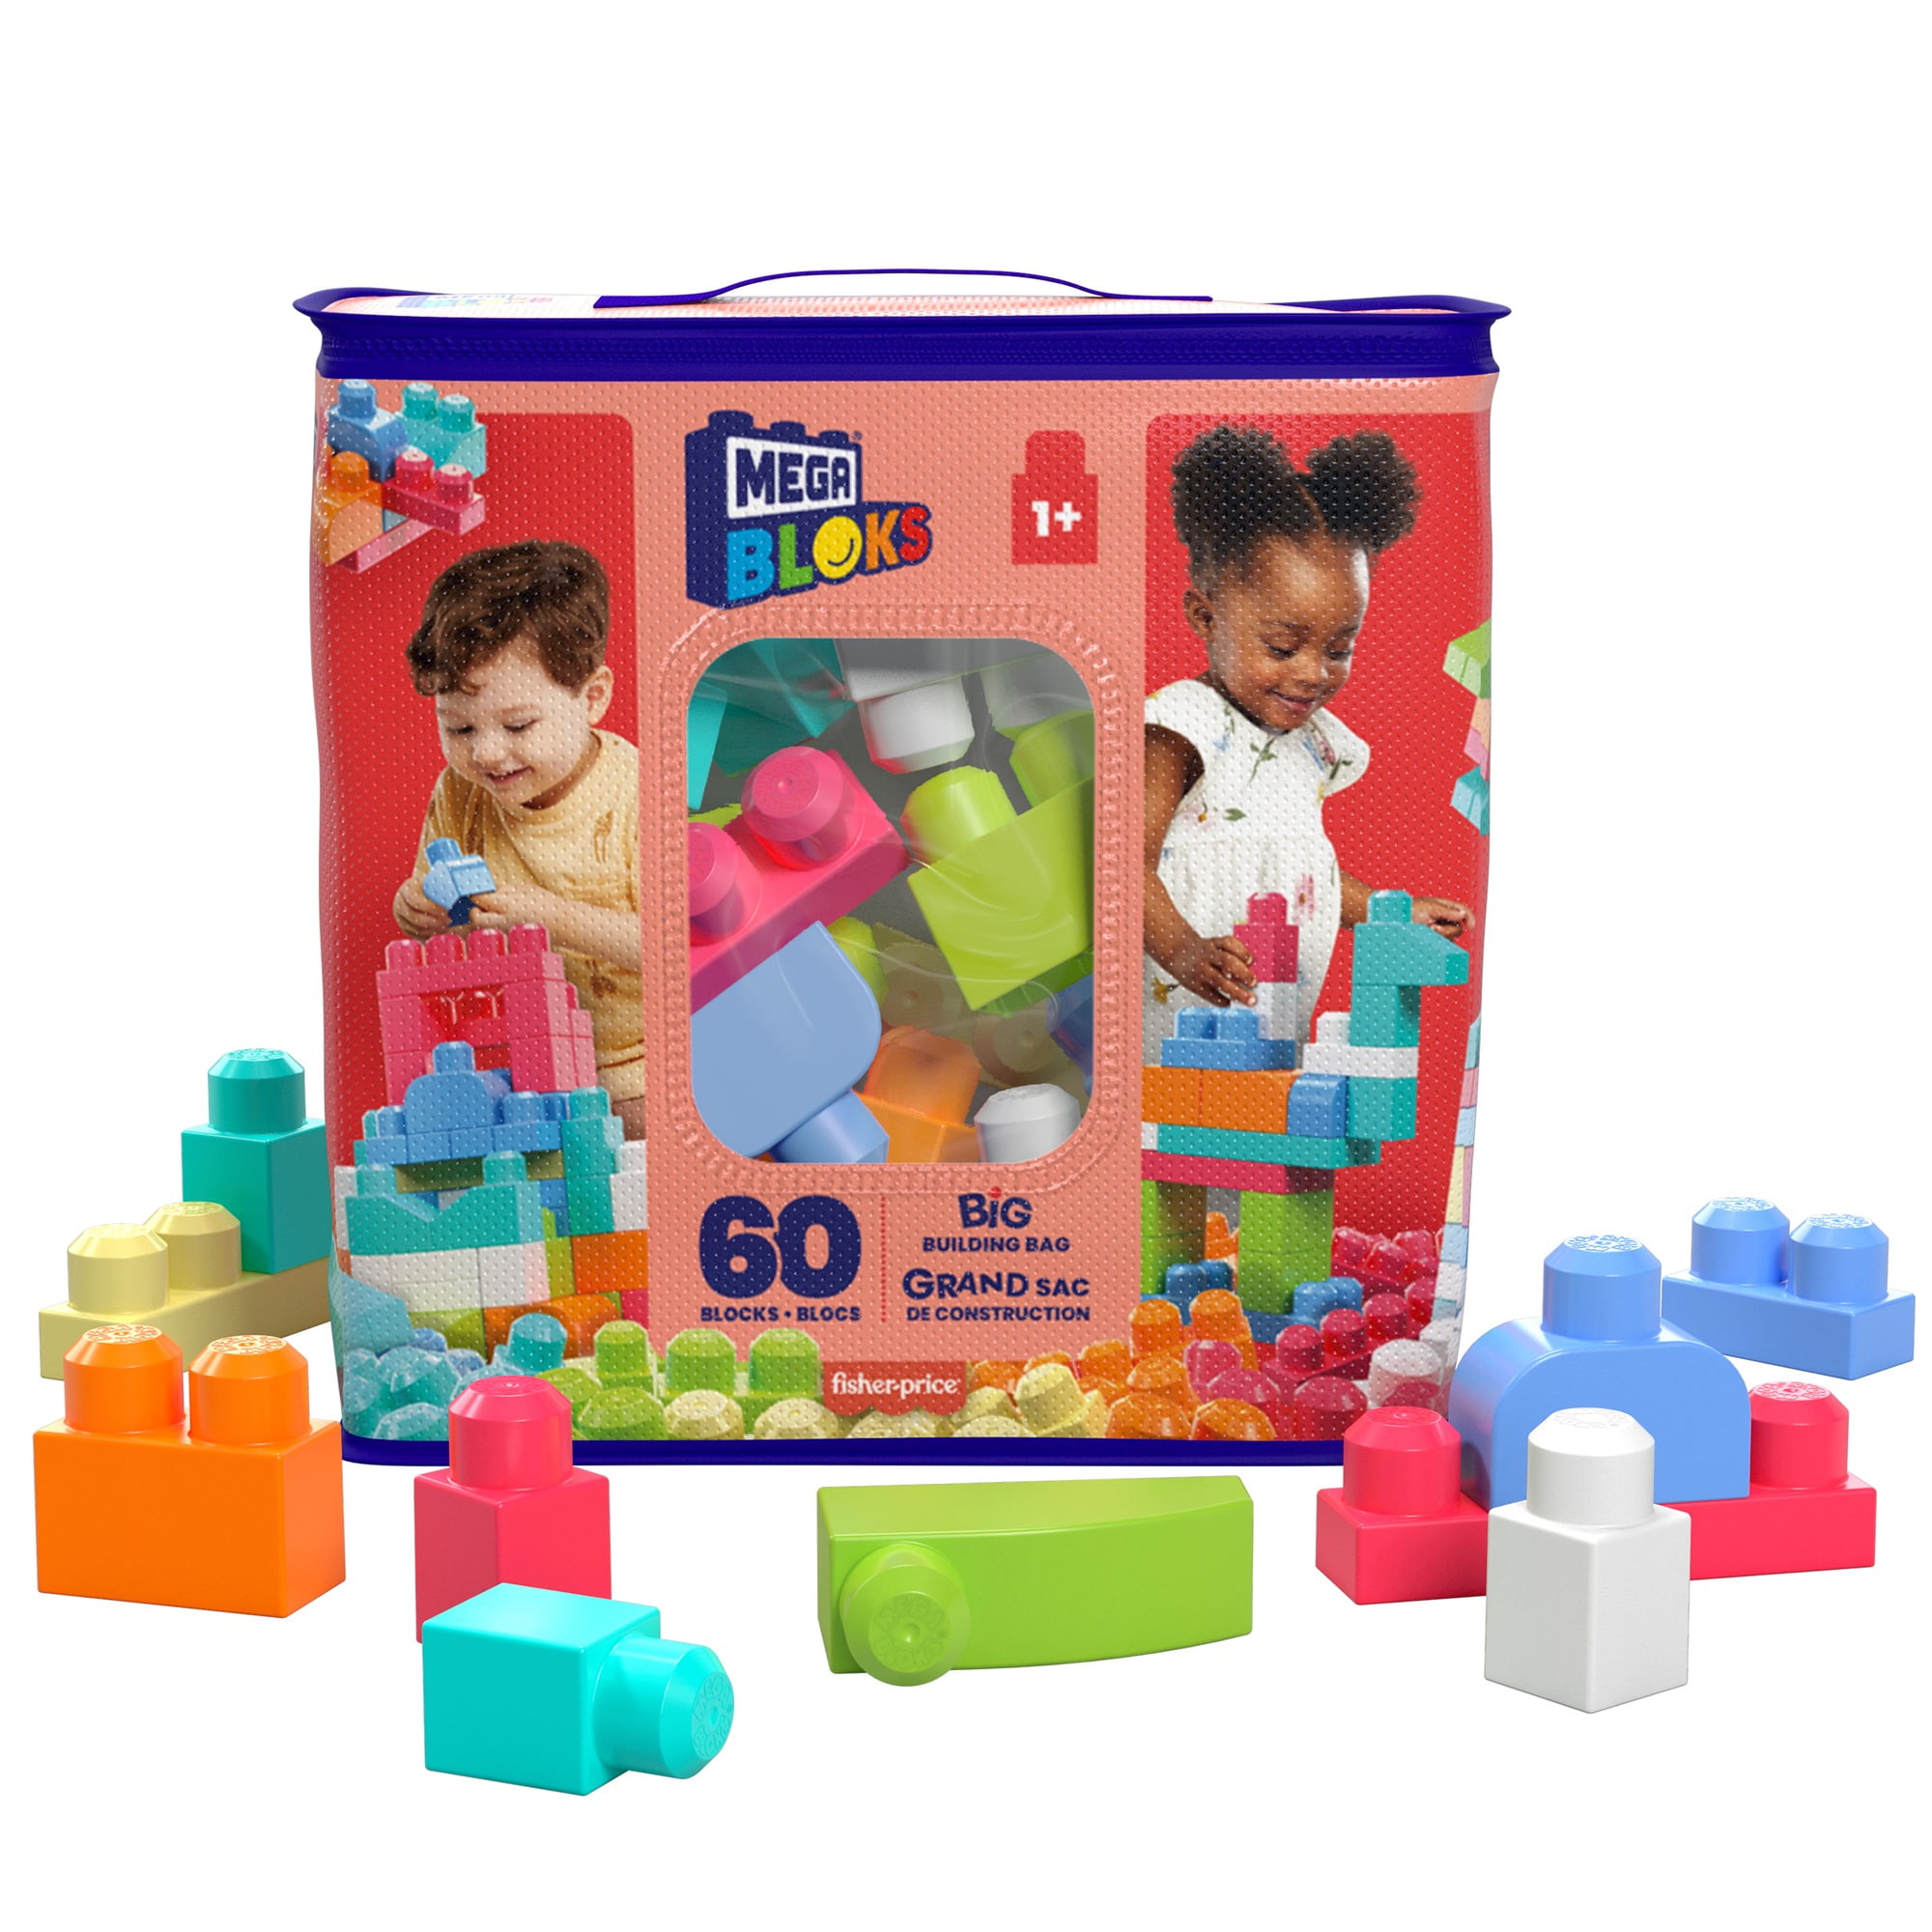 Mega Bloks Building Bag 60 Pieces Toy Bricks Blocks For Baby Girl New 